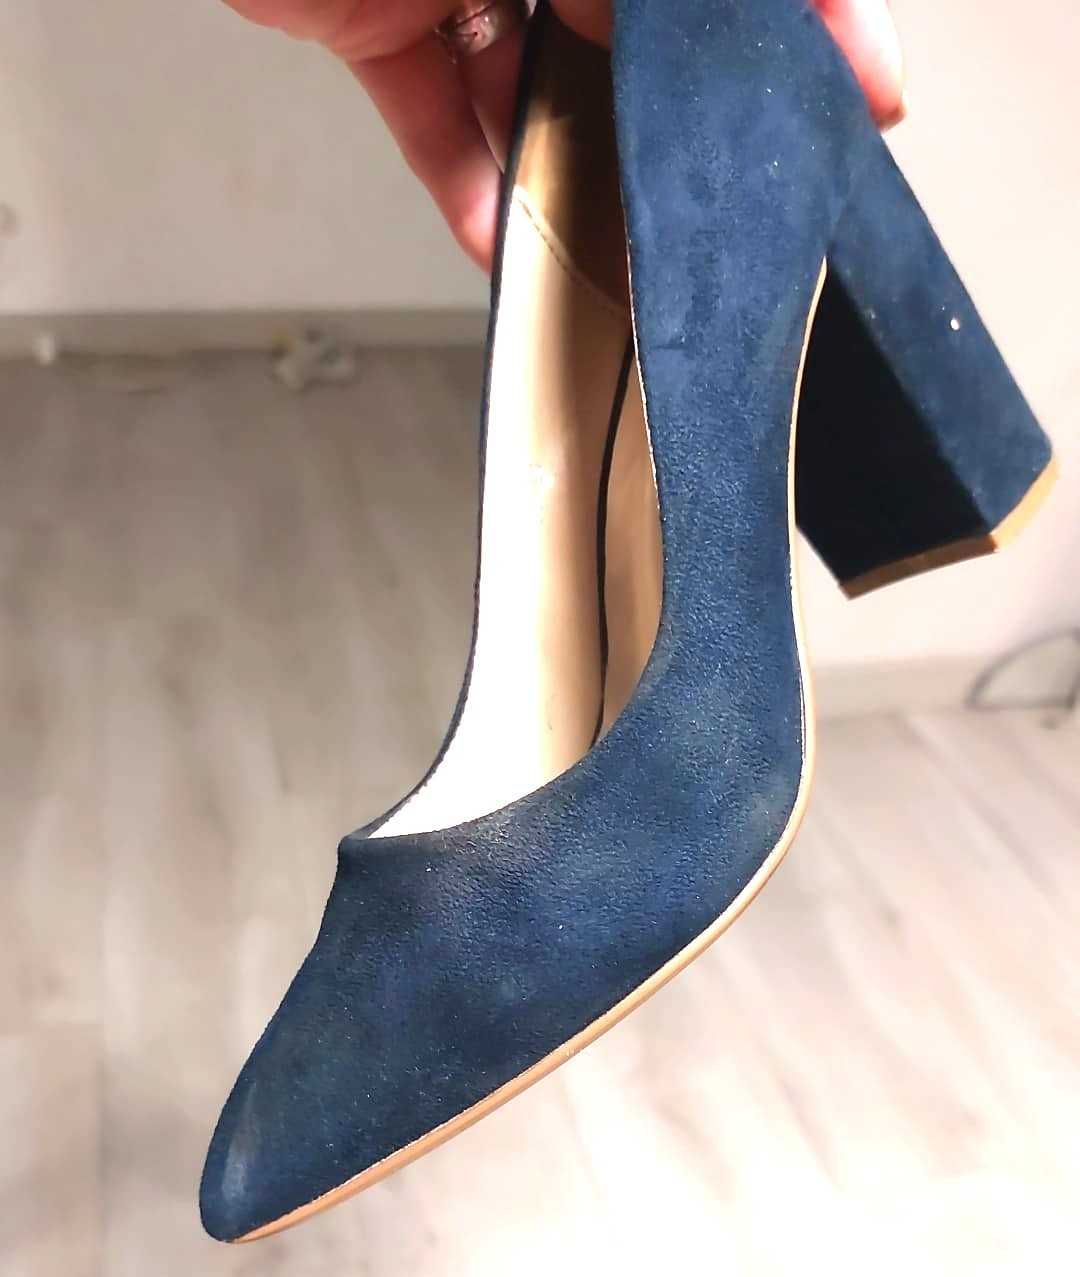 Pantof albastru inchis